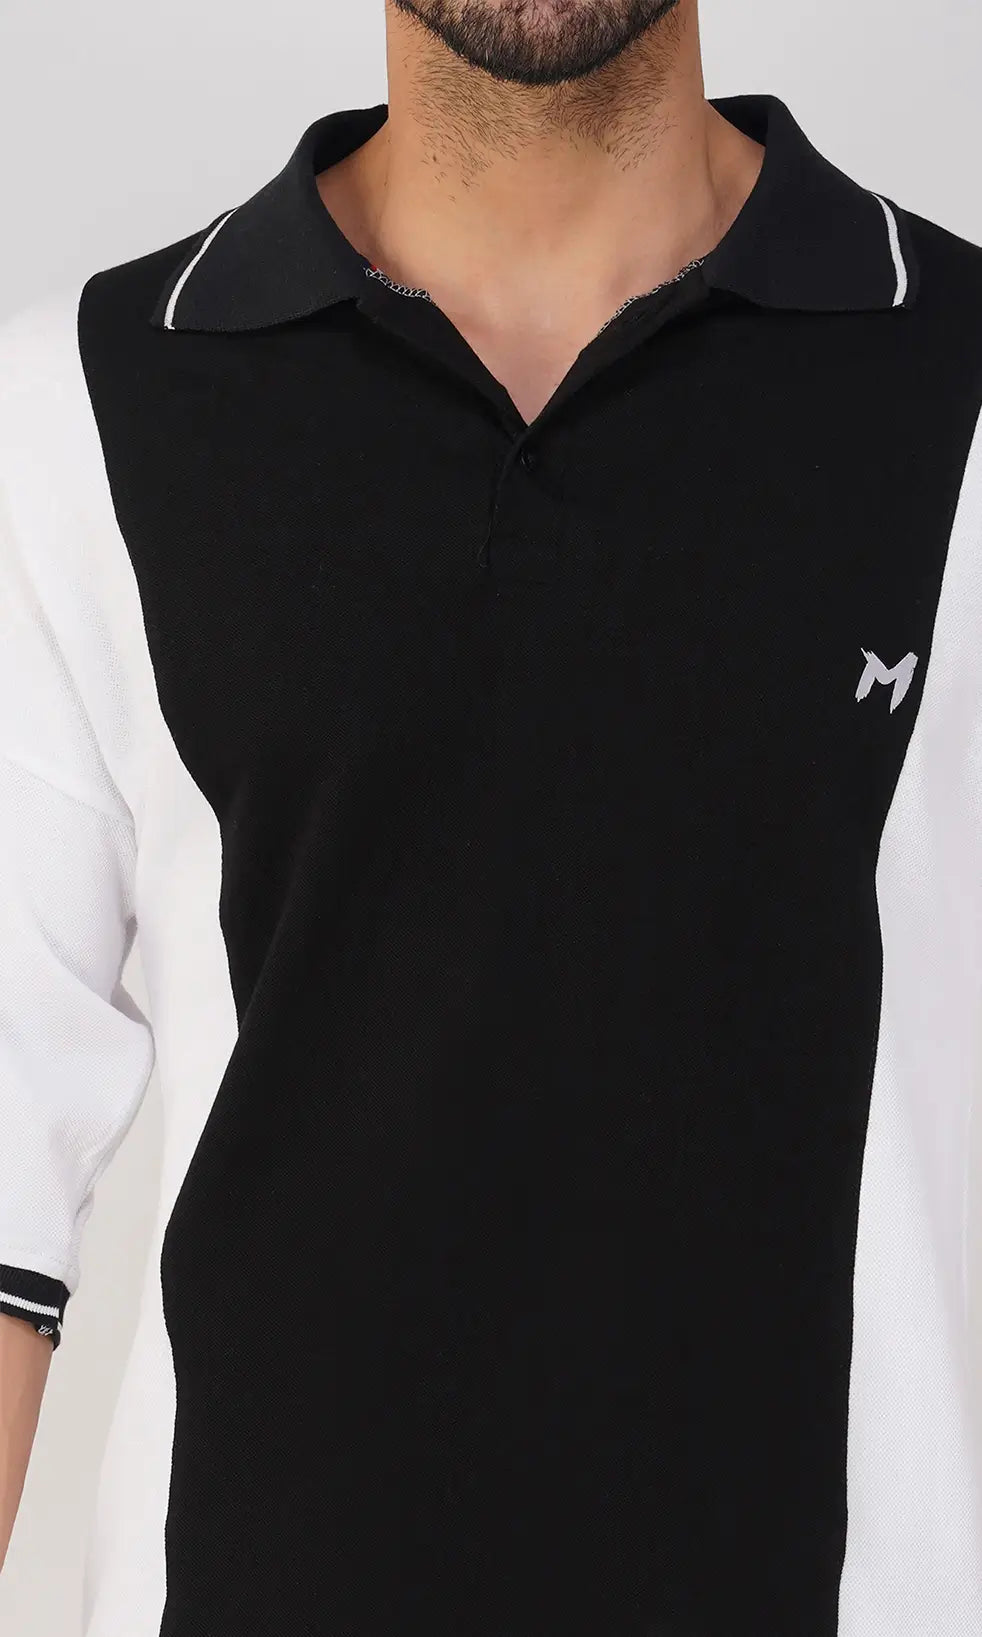 Mebadass Cotton Men's Colorblocked Oversized Collar T-shirt - White & Black